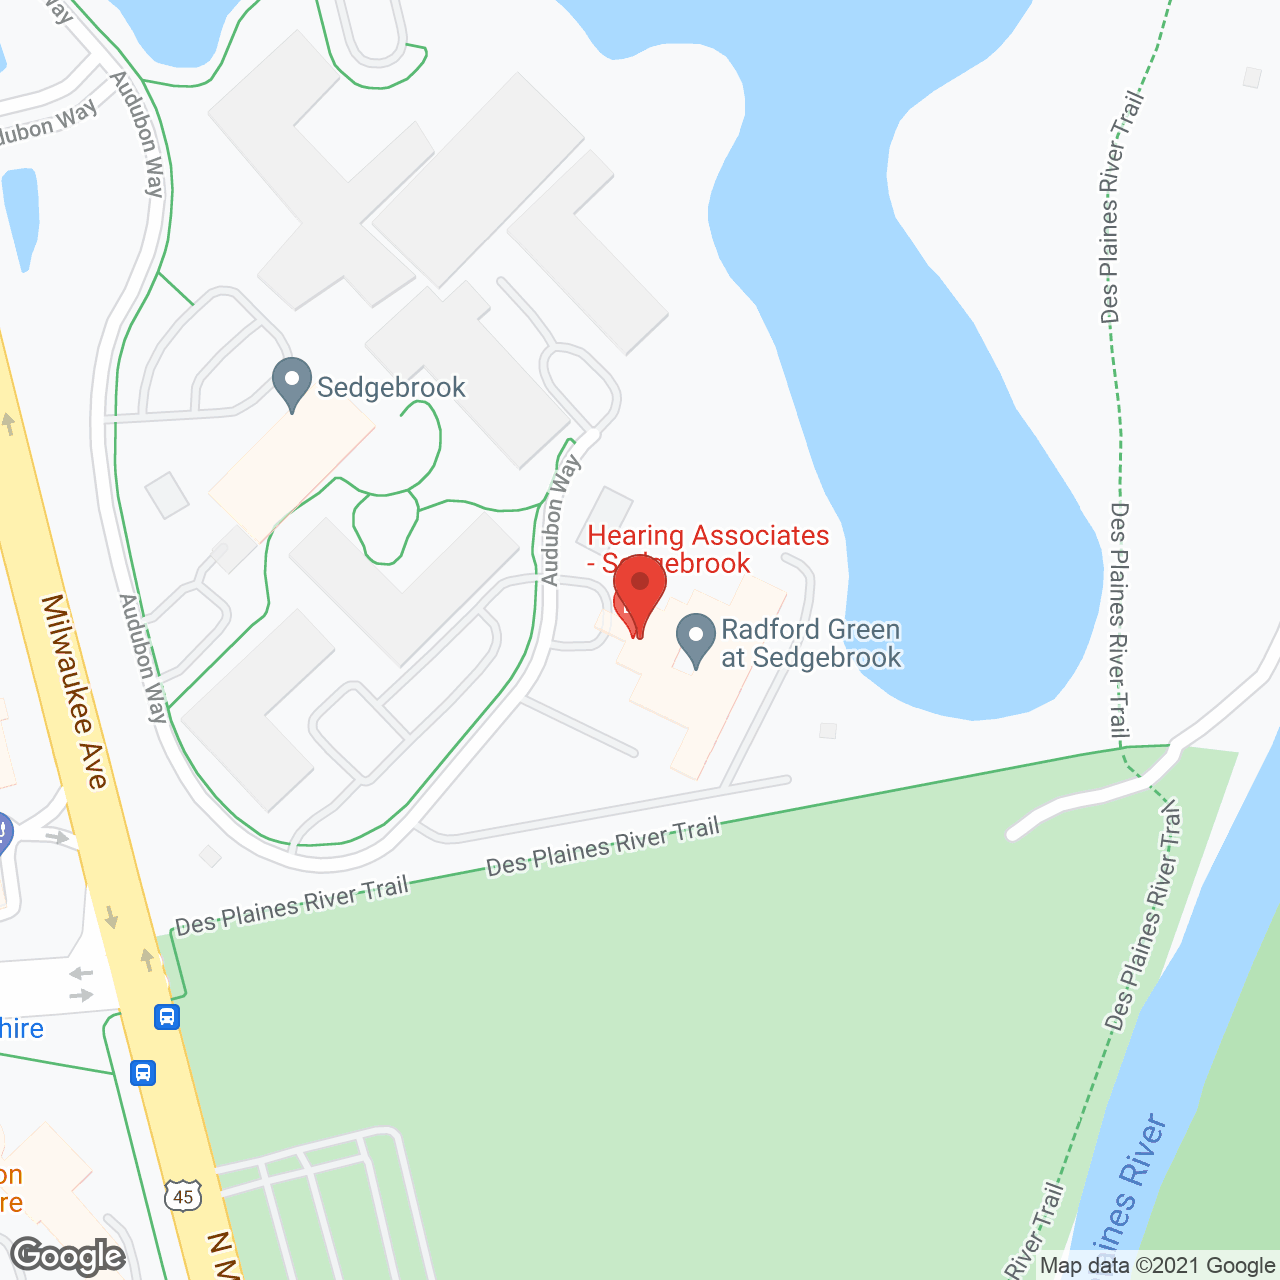 Sedgebrook in google map